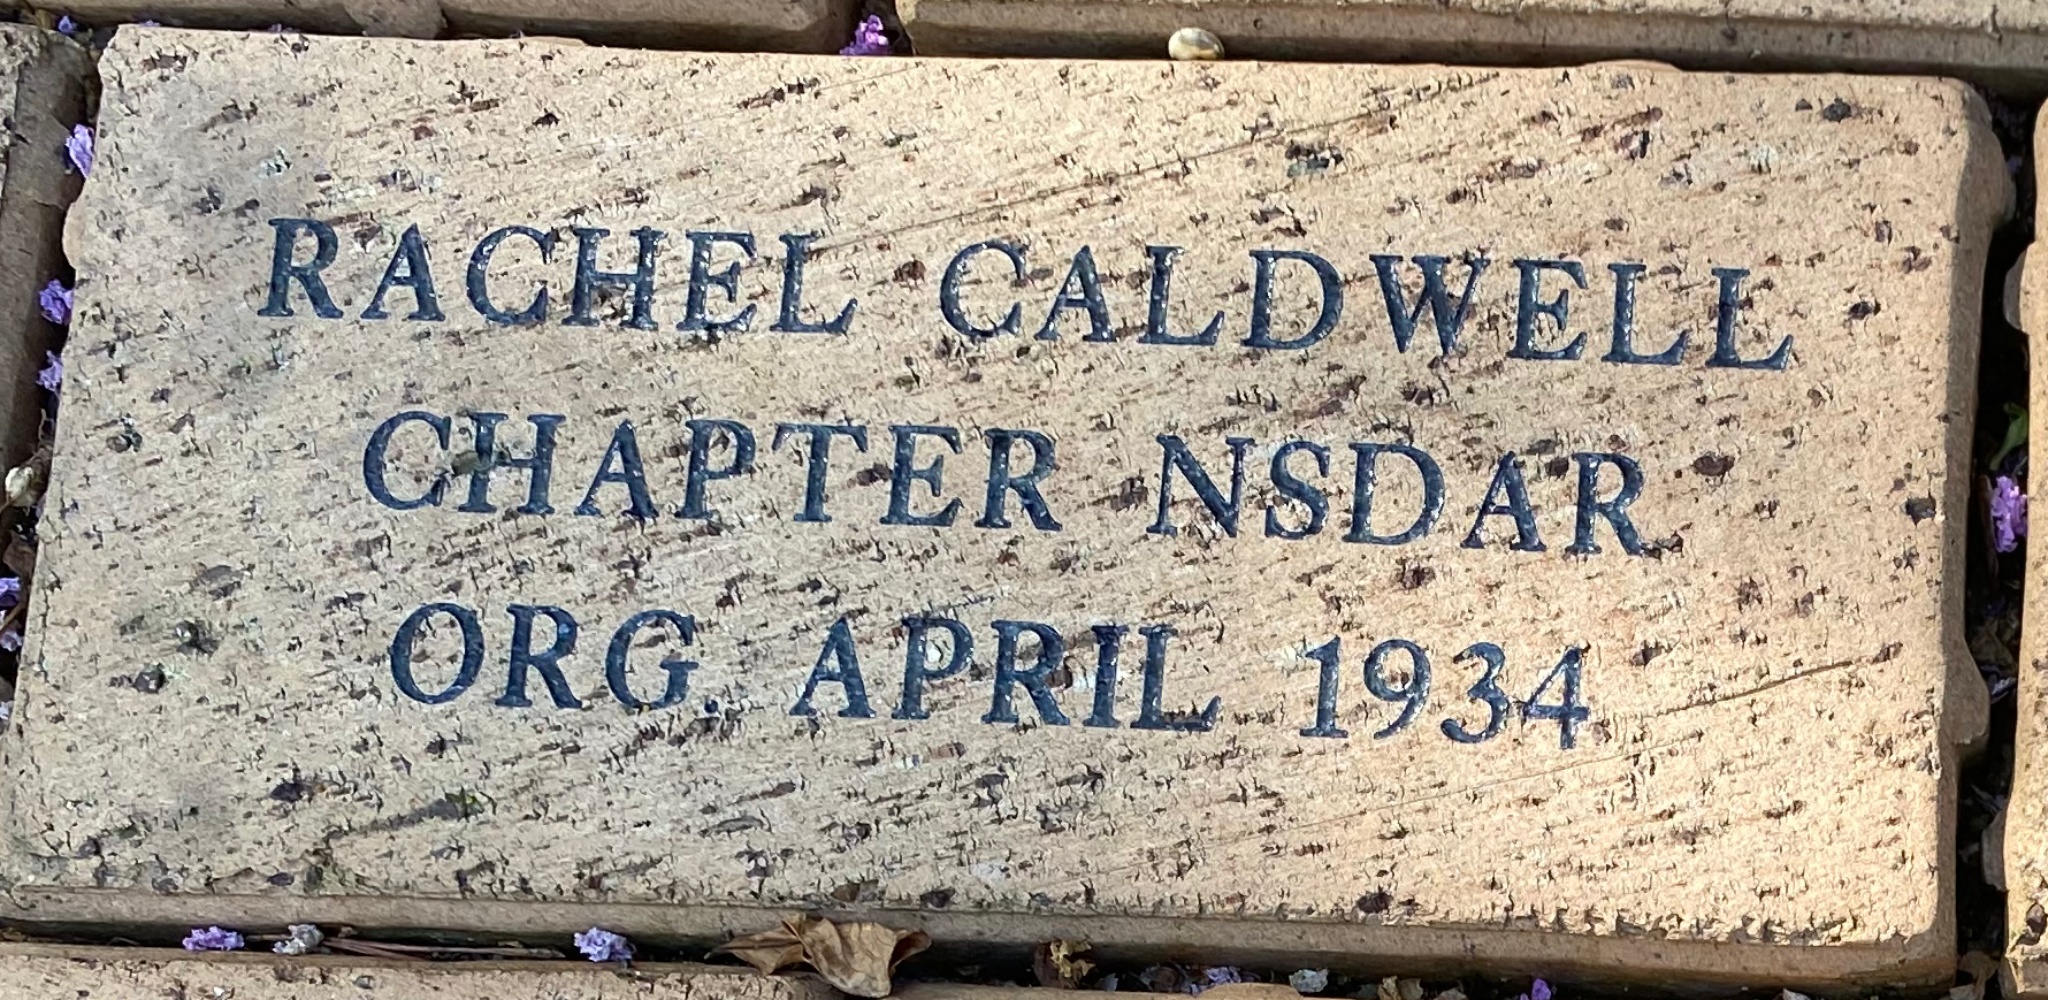 RACHEL CALDWELL CHAPTER NSDAR ORG. APRIL 1934